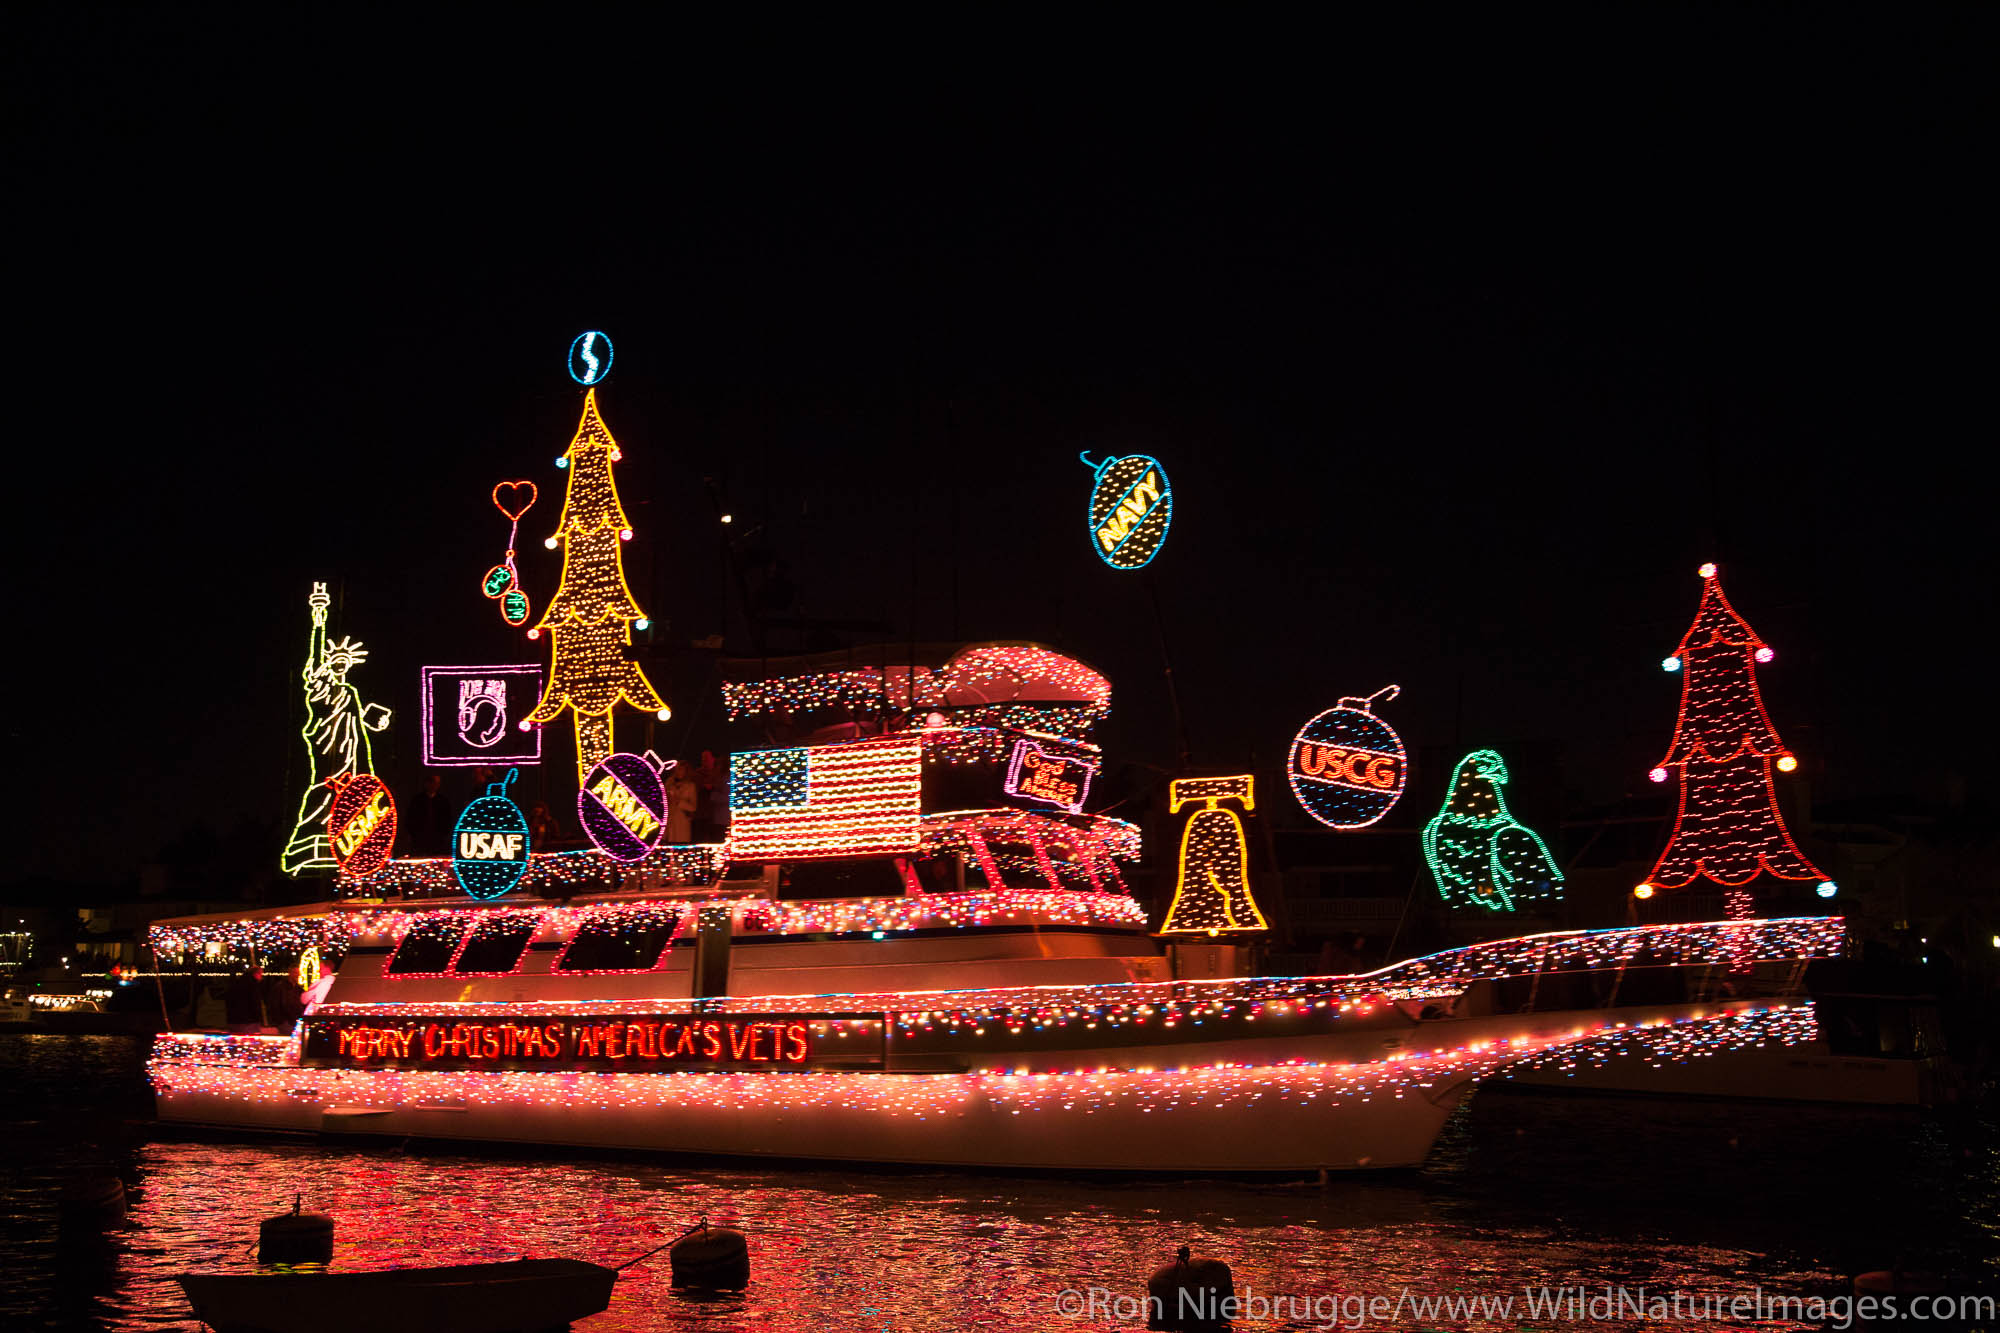 Balboa Island during the Christmas Boat Parade, Newport Beach, Orange County, California.